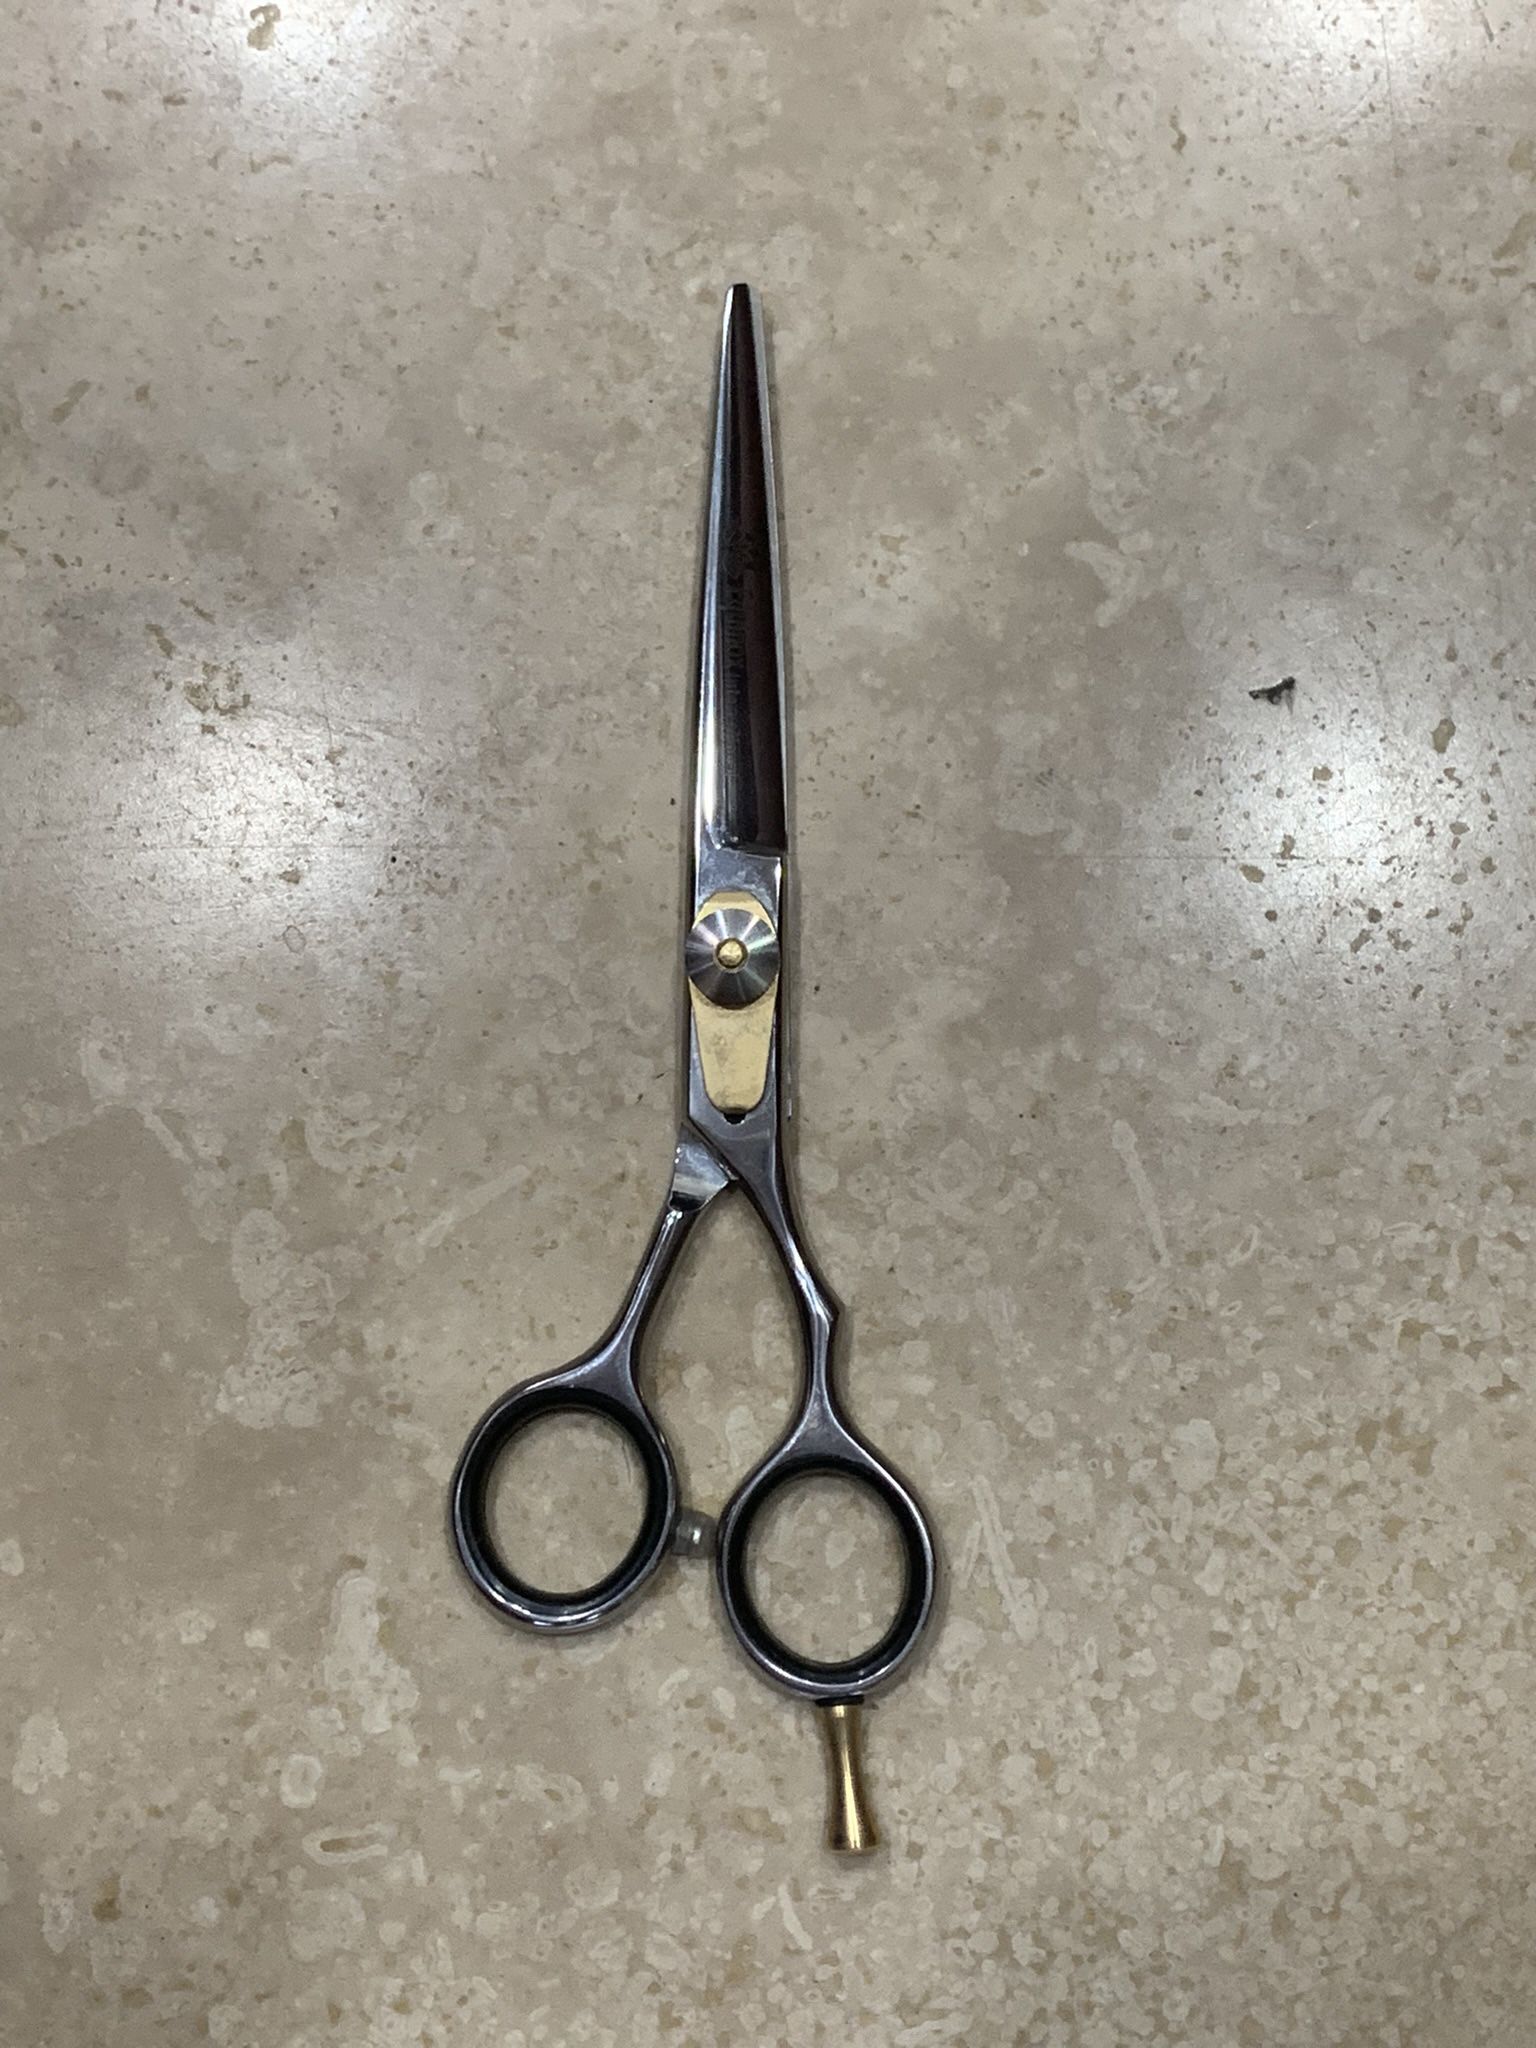 Japanese Stainless Steel Salon Scissors - 6.5”  - Fine Adjustment 